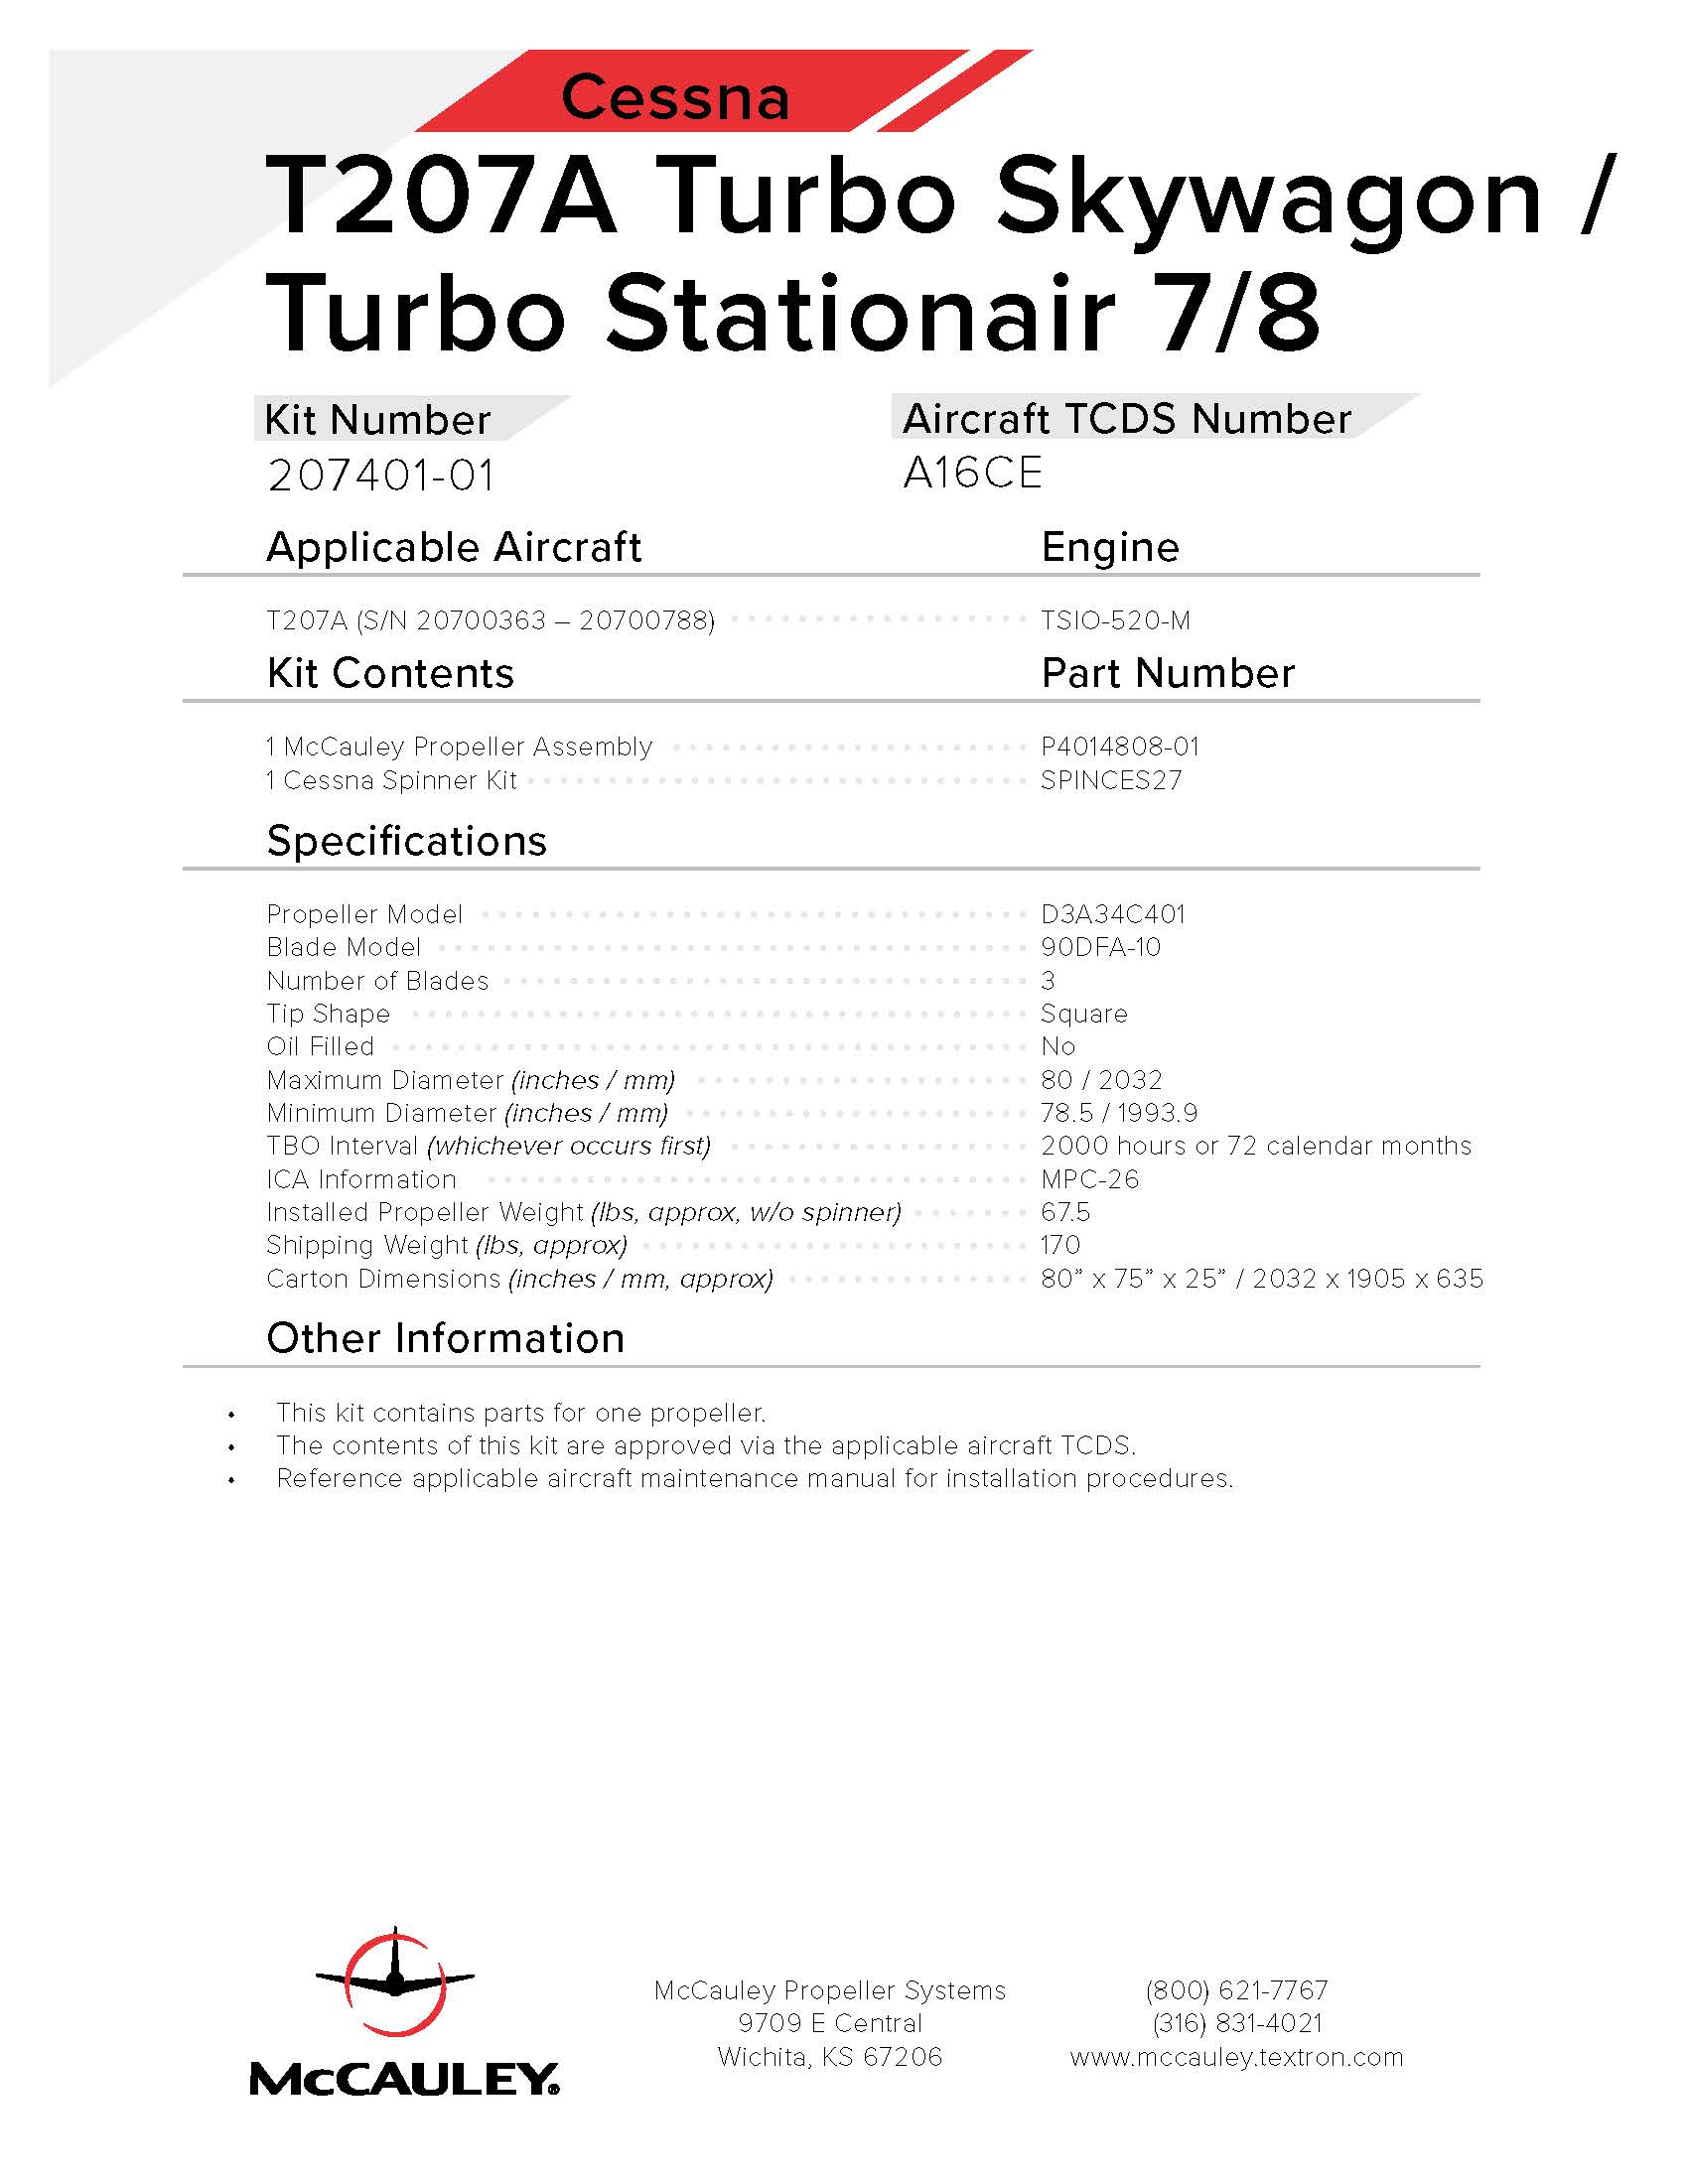 CESSNA-T207A-TURBO-SKYWAGON-TURBO-STATIONAIR-7-8-207401-01-PAGE-1